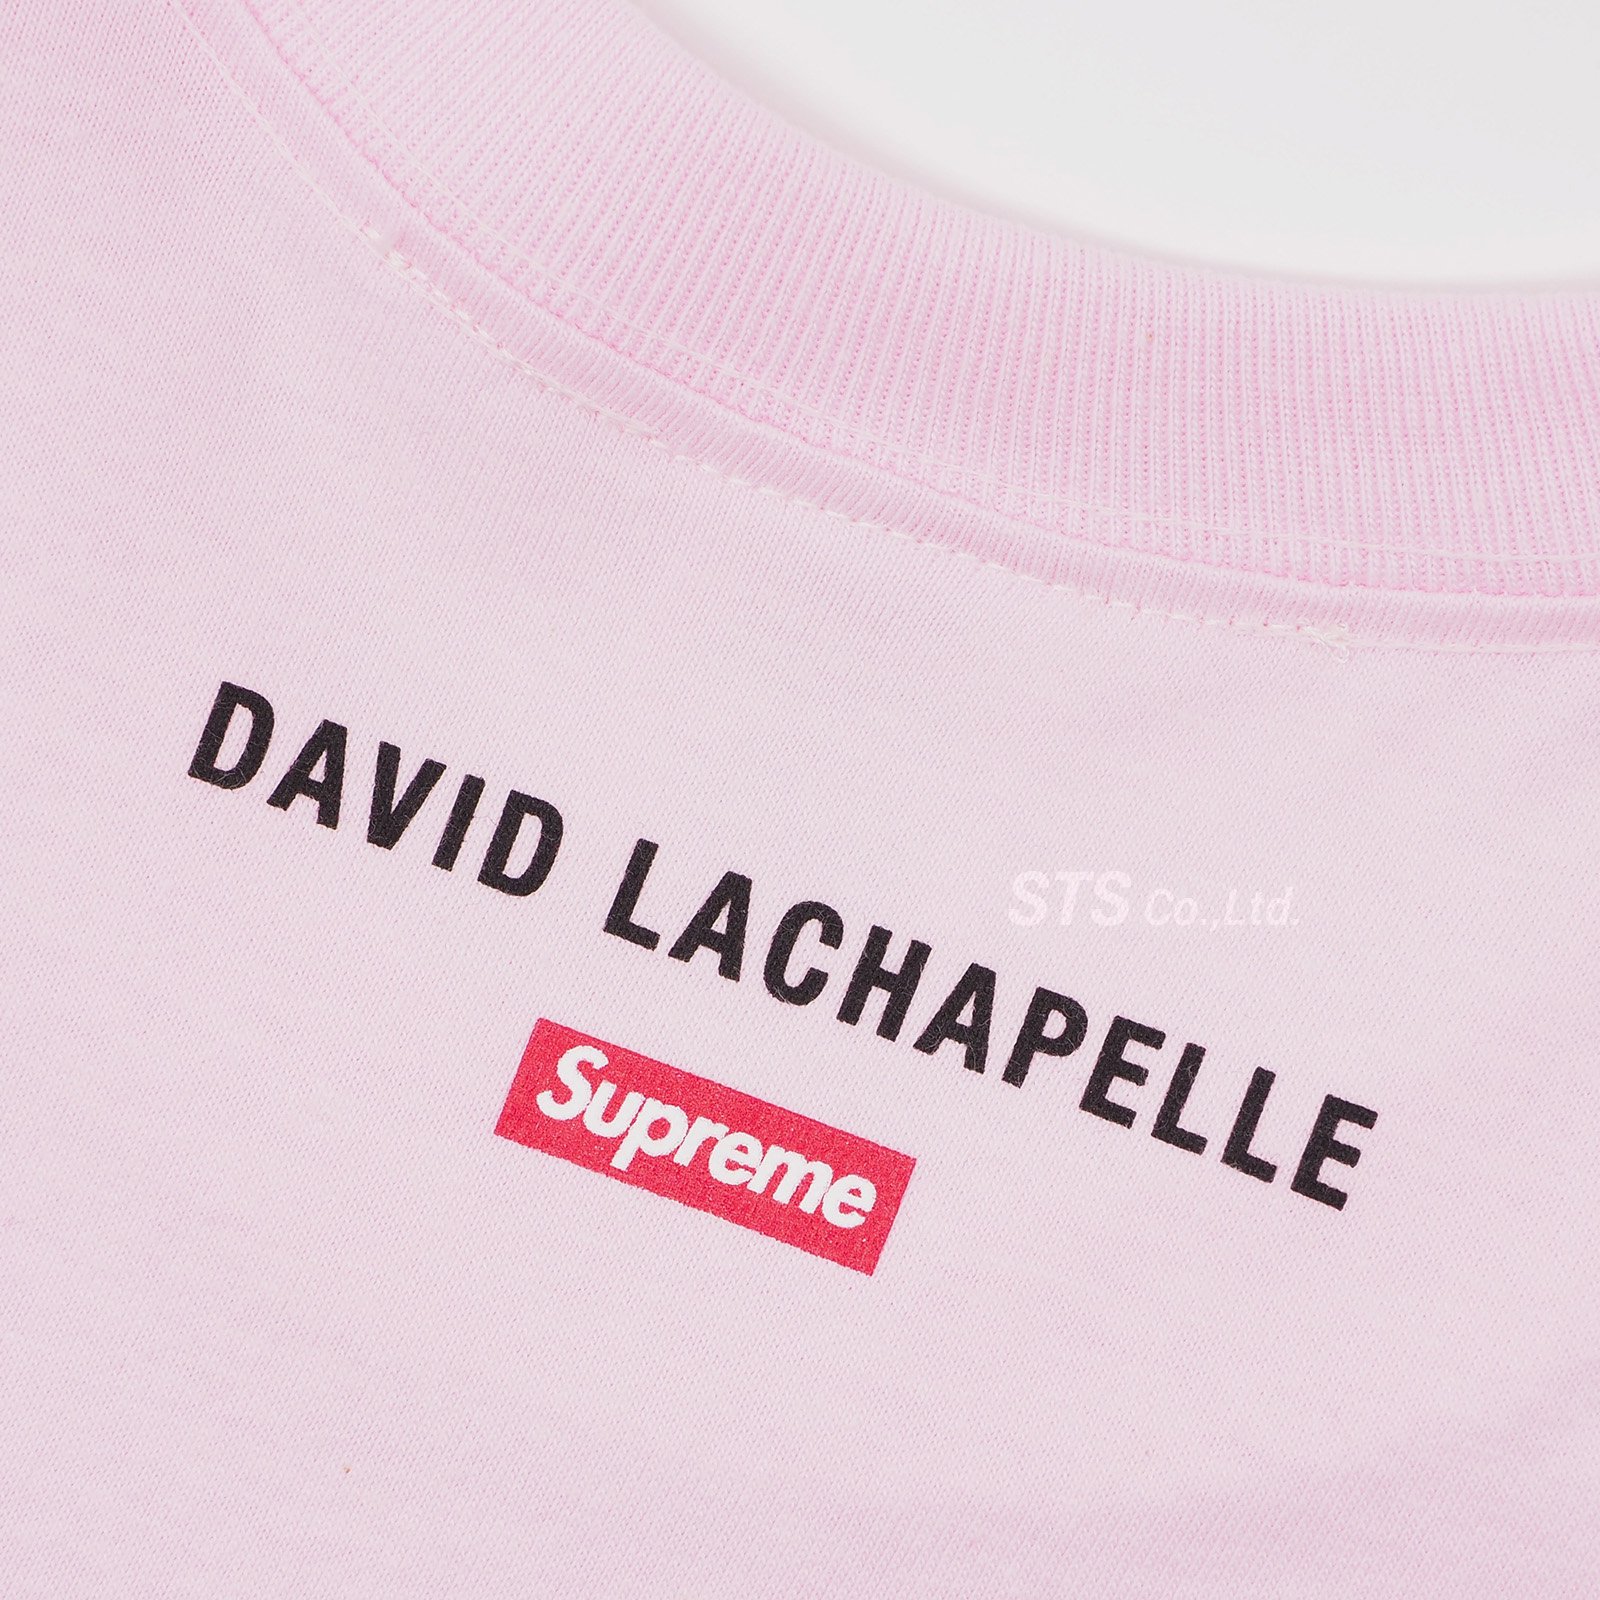 Supreme - Holy War Tee | Supreme x David LaChapelle - ParkSIDER